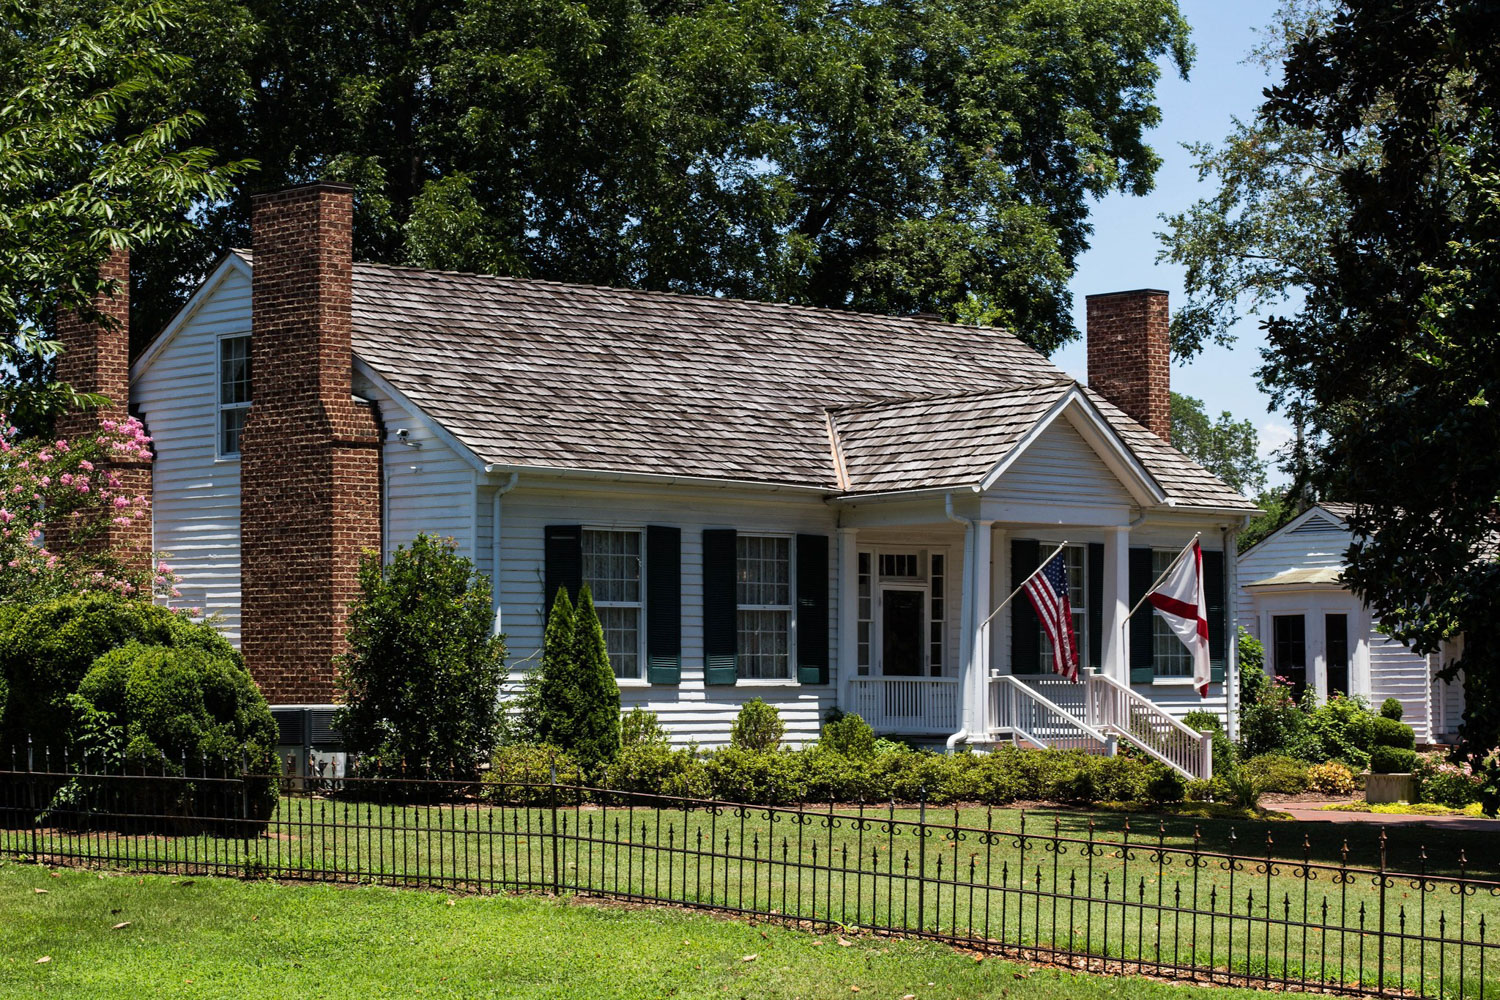 Ivy Green Helen Keller Home in Alabama Photo Steven Taylor on Fl